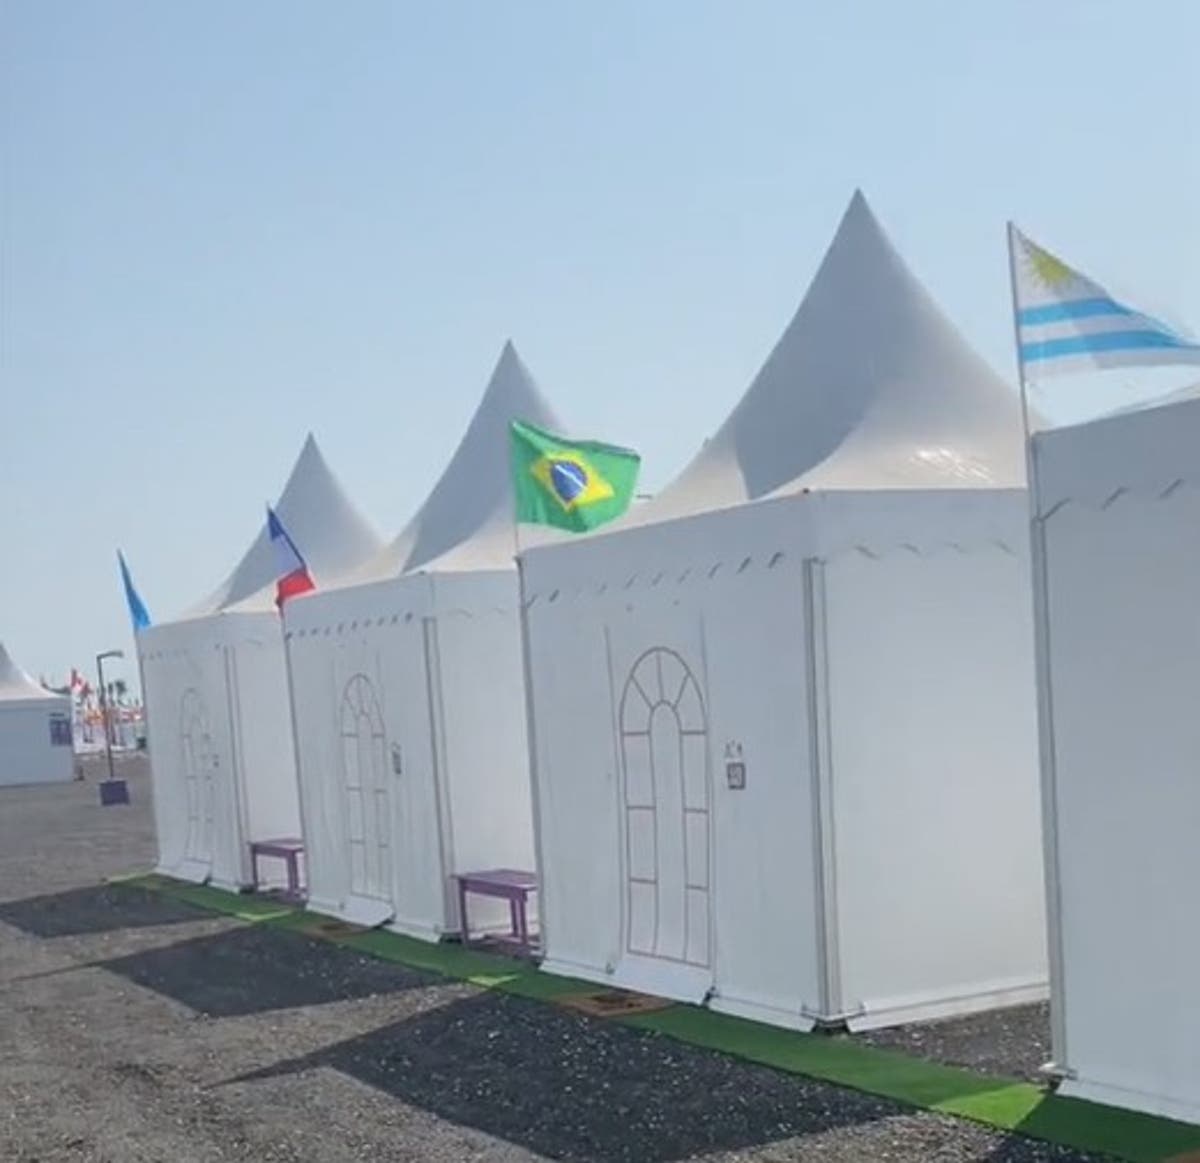 Murky tap water, roasting heat, no loo roll: Inside Qatar’s £175-a-night fan tents